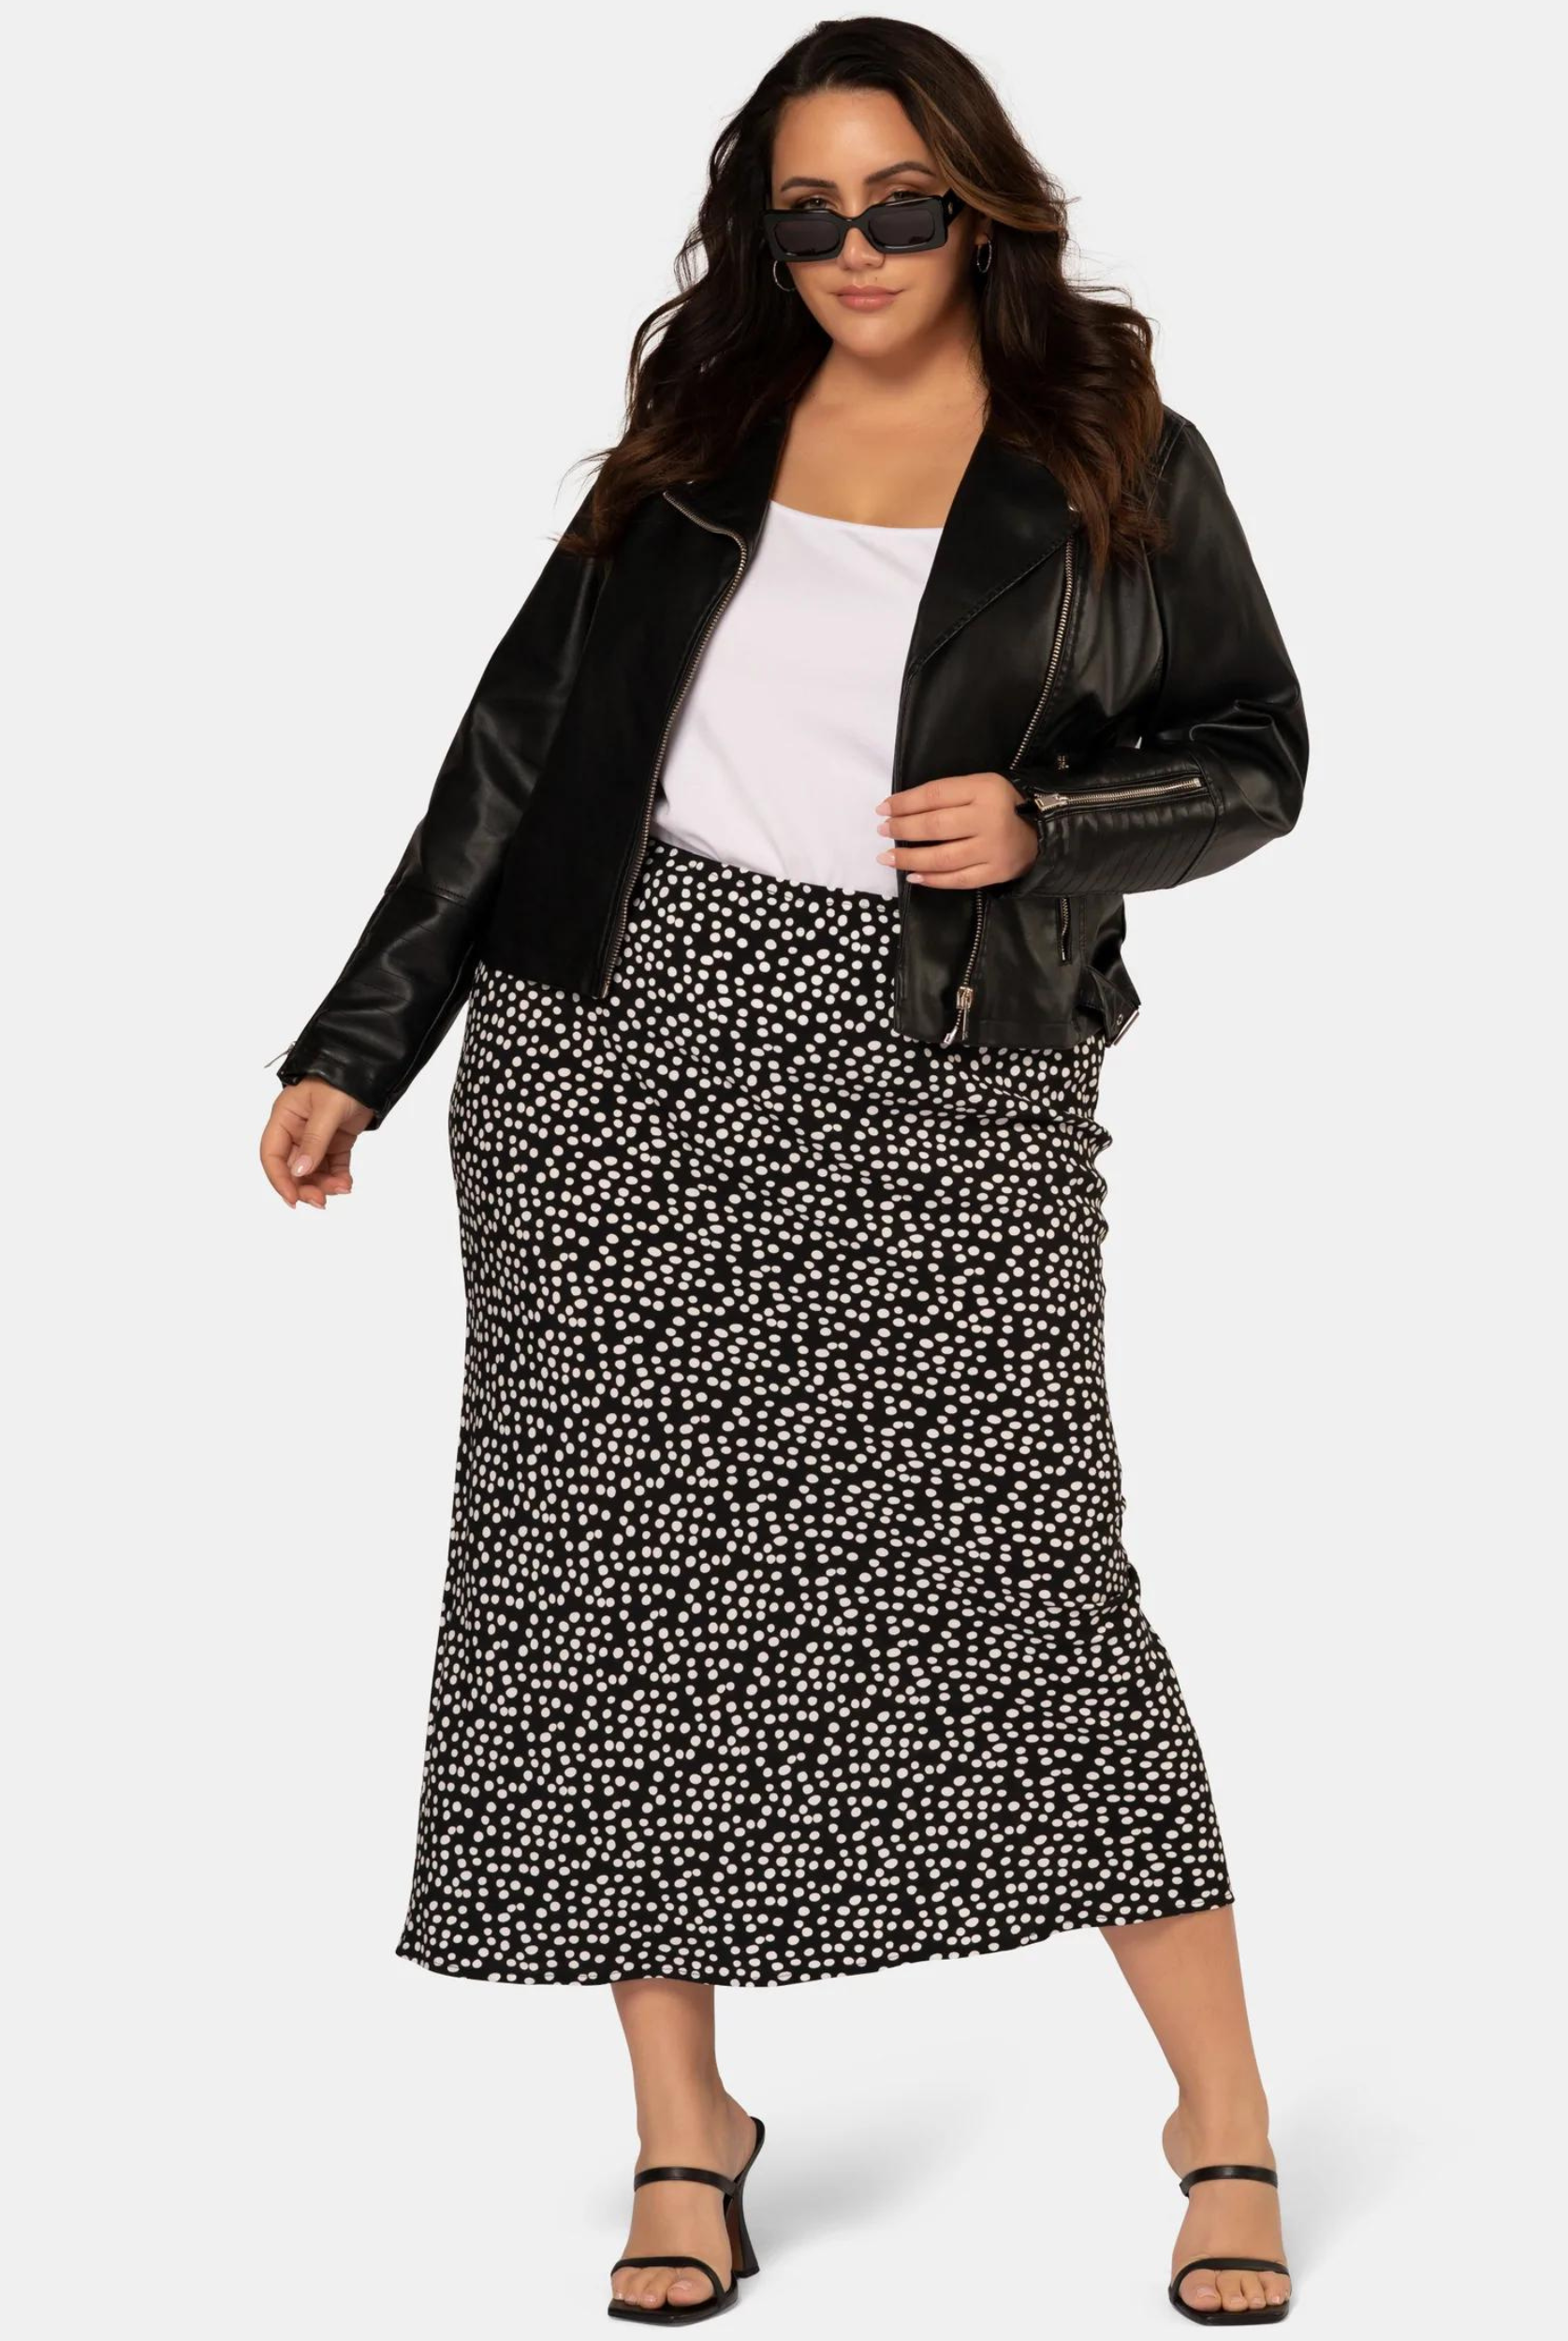 Model wearing the black and white spot print midi skirt in viscose crepe